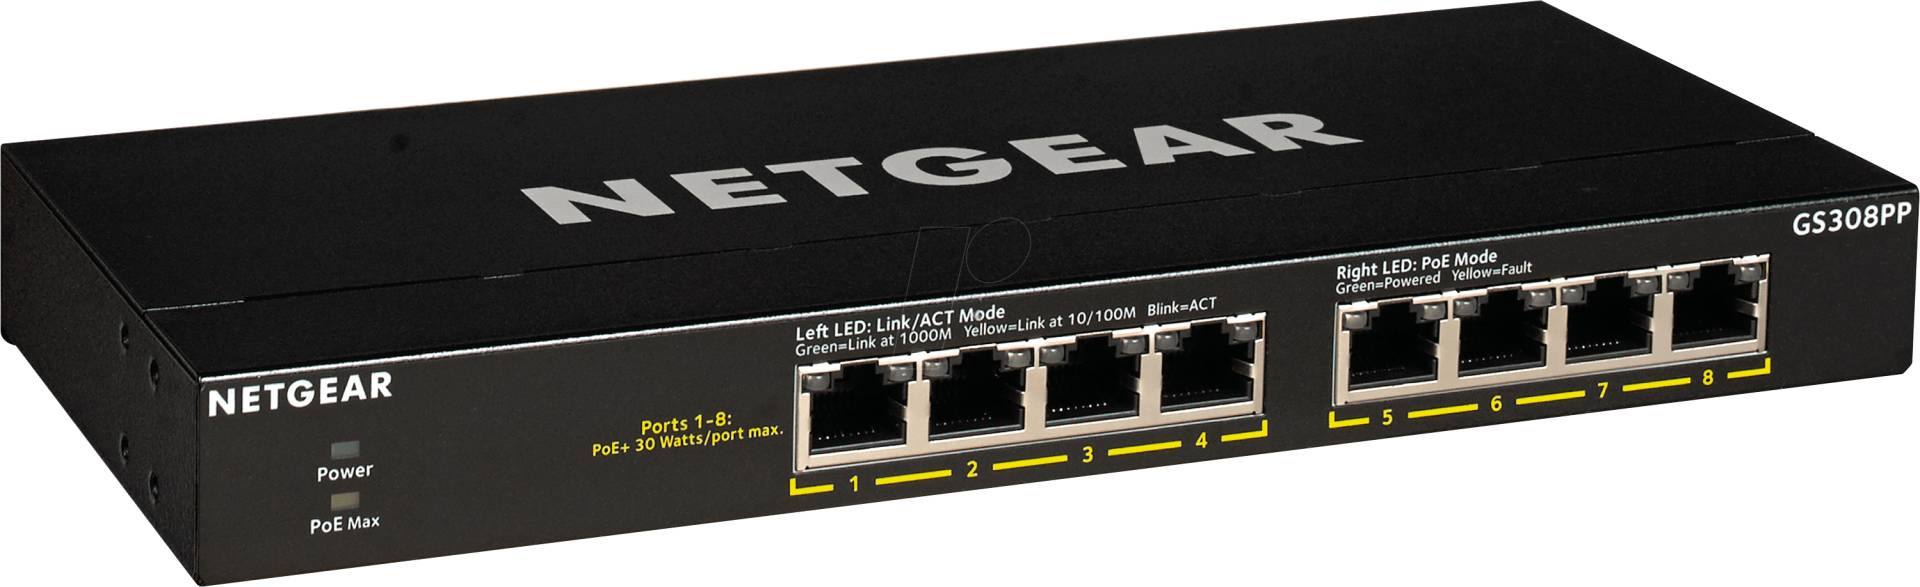 NETGEAR GS308PP - Switch, 8-Port, Gigabit Ethernet, PoE+ von Netgear